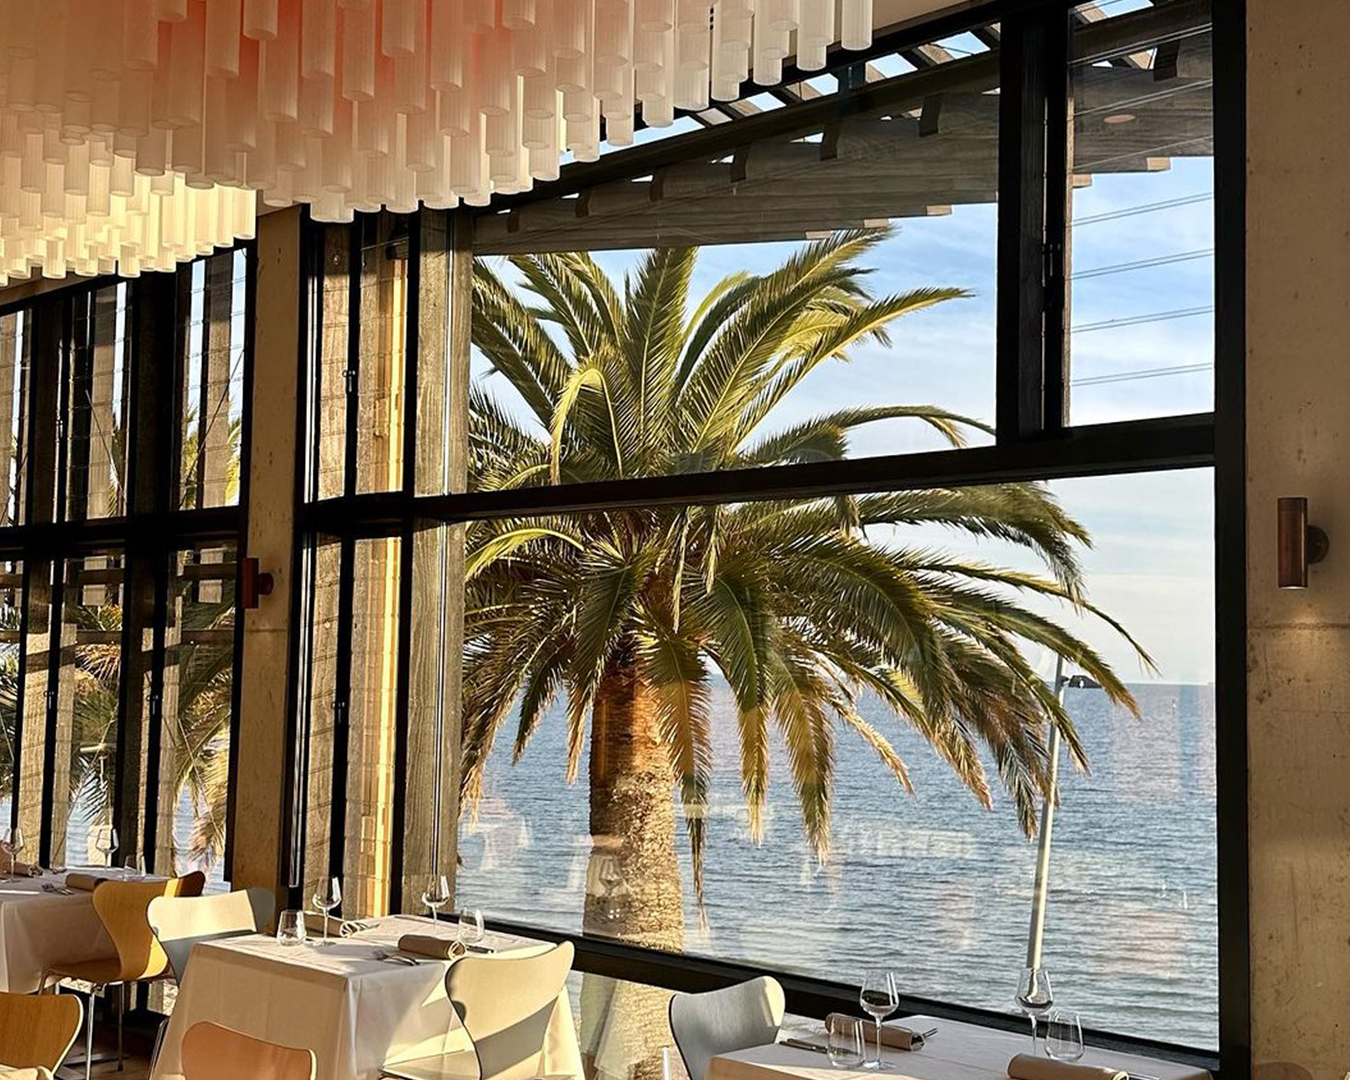 Stokehouse Restaurant With Views Of St Kilda Beach